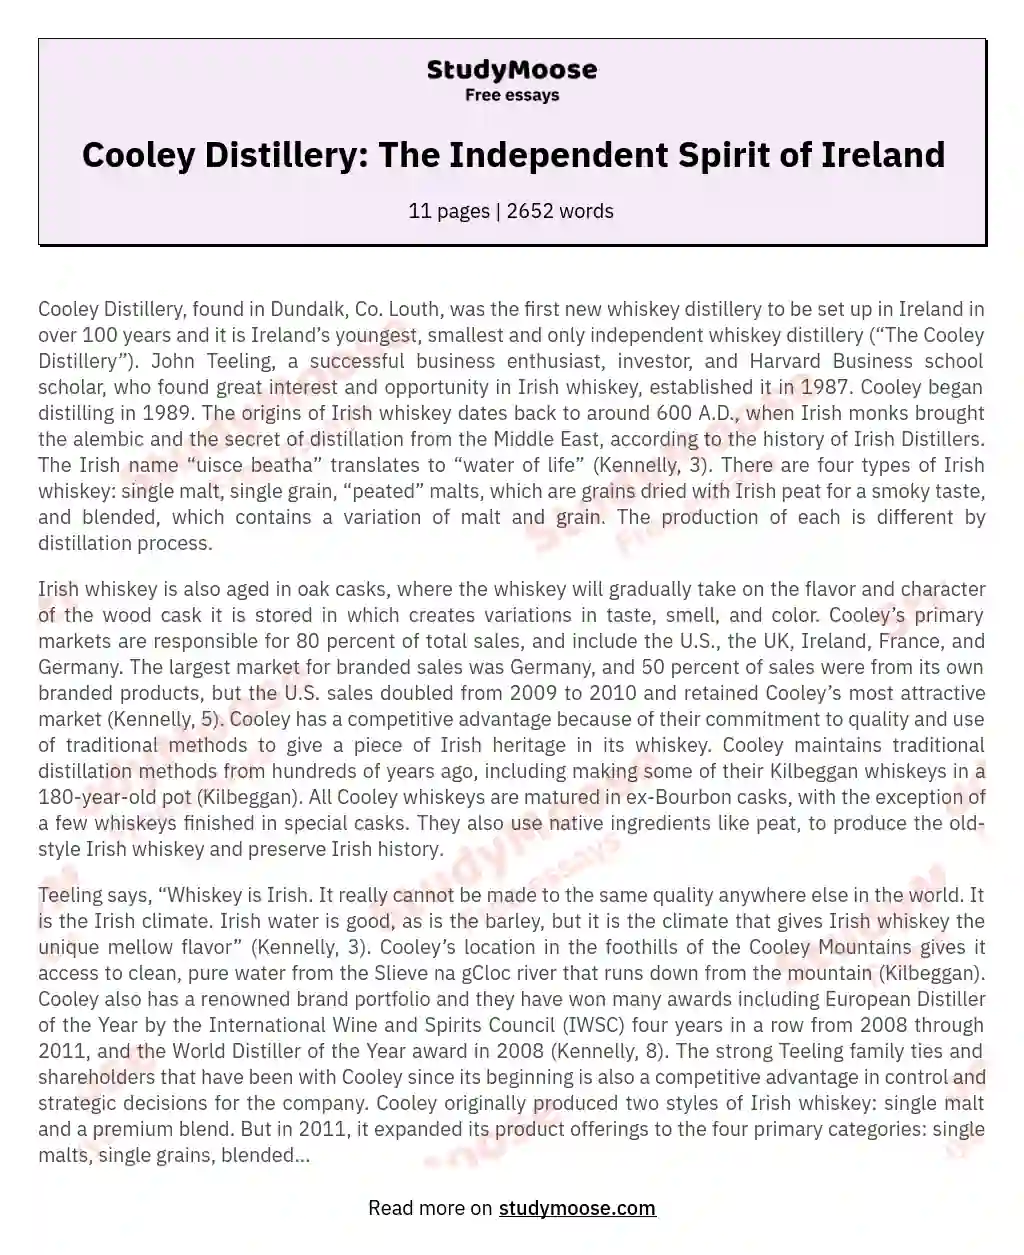 Cooley Distillery: The Independent Spirit of Ireland essay